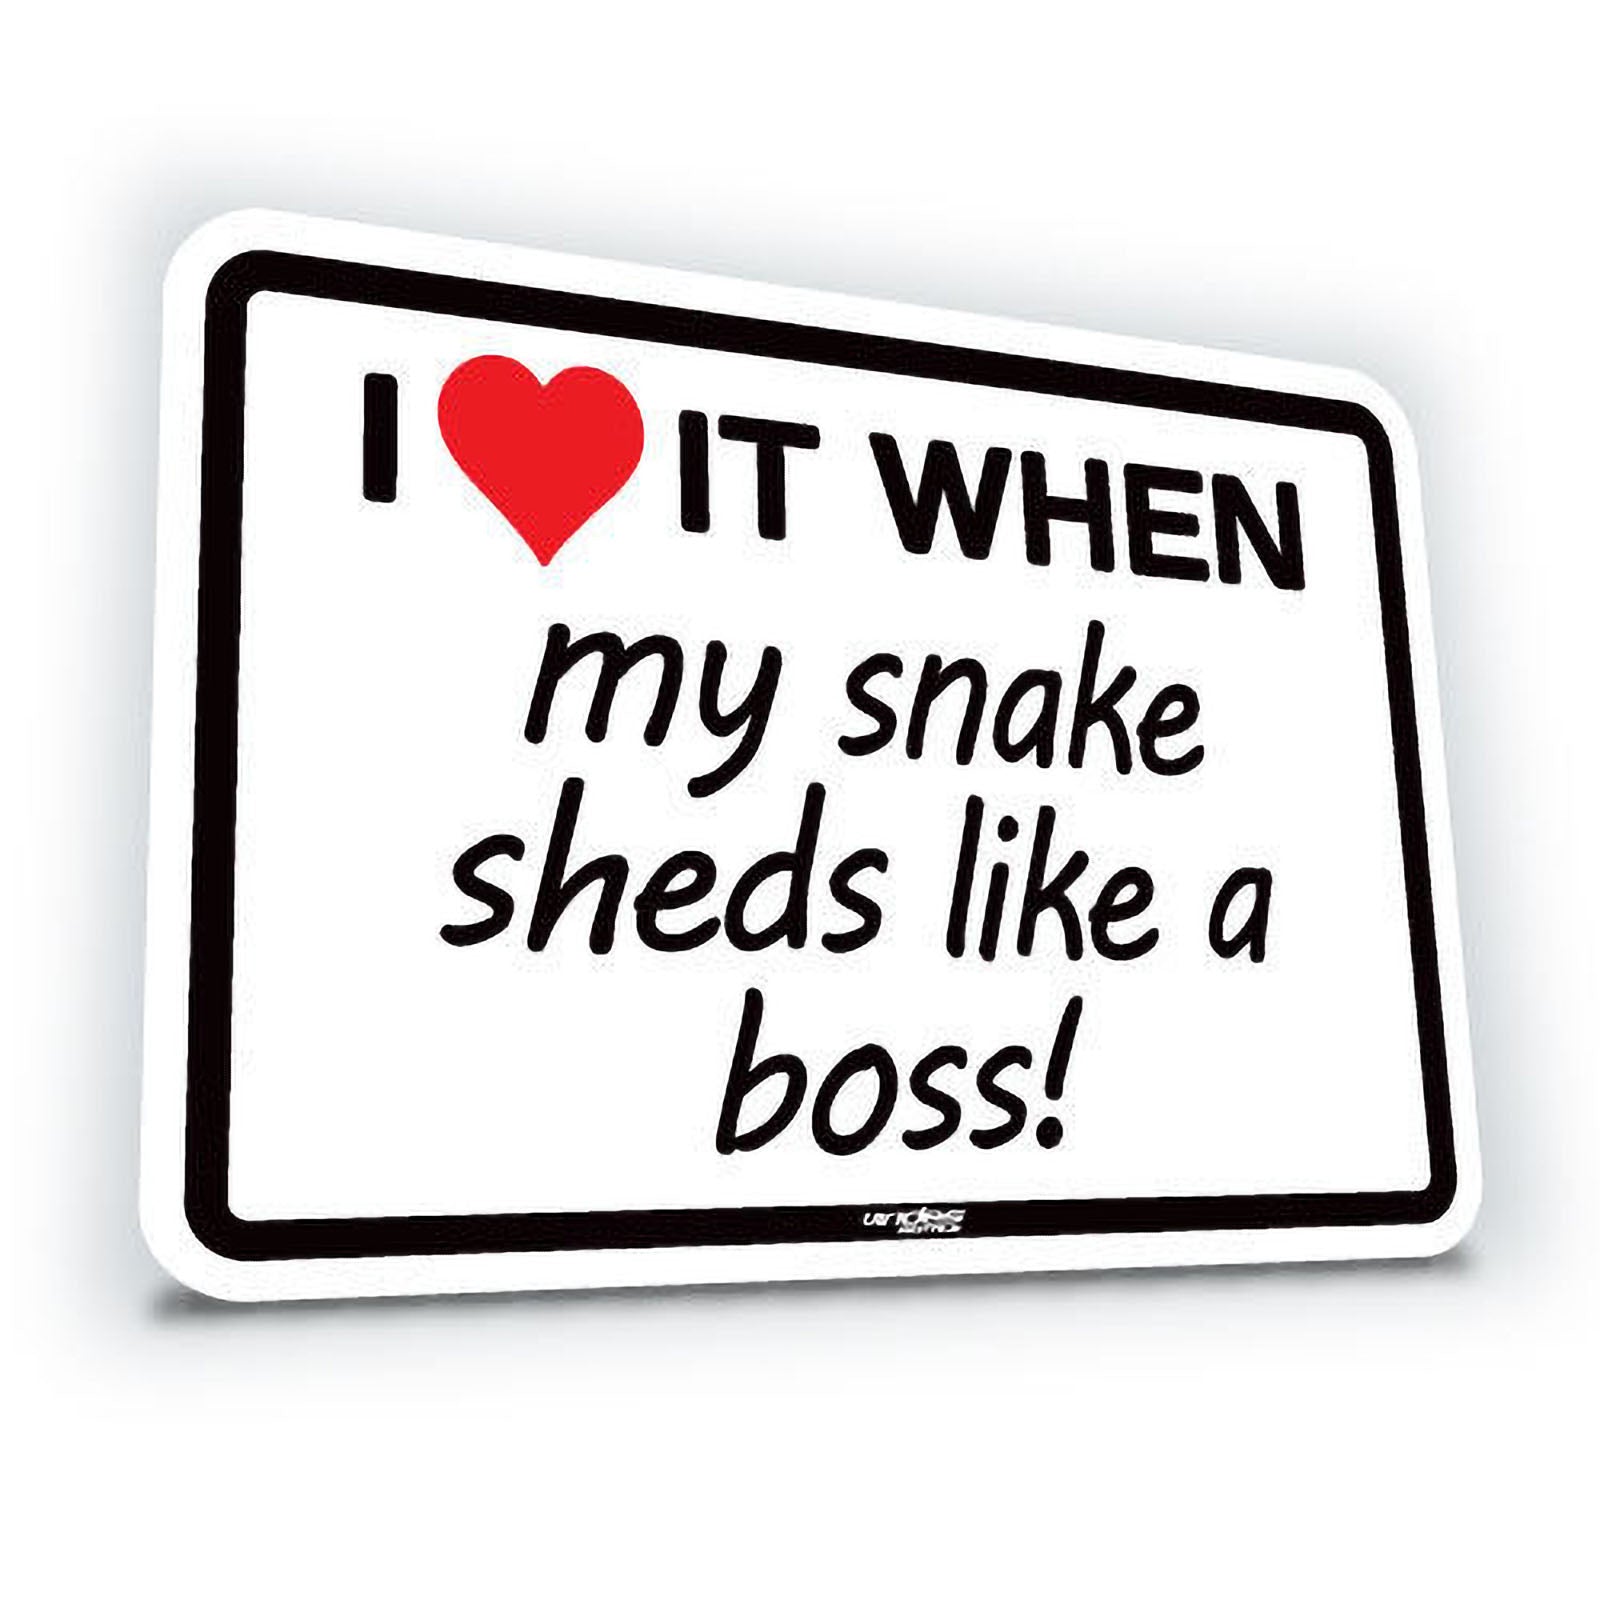 Sticker I Love It When My Snake Sheds Like A Boss!